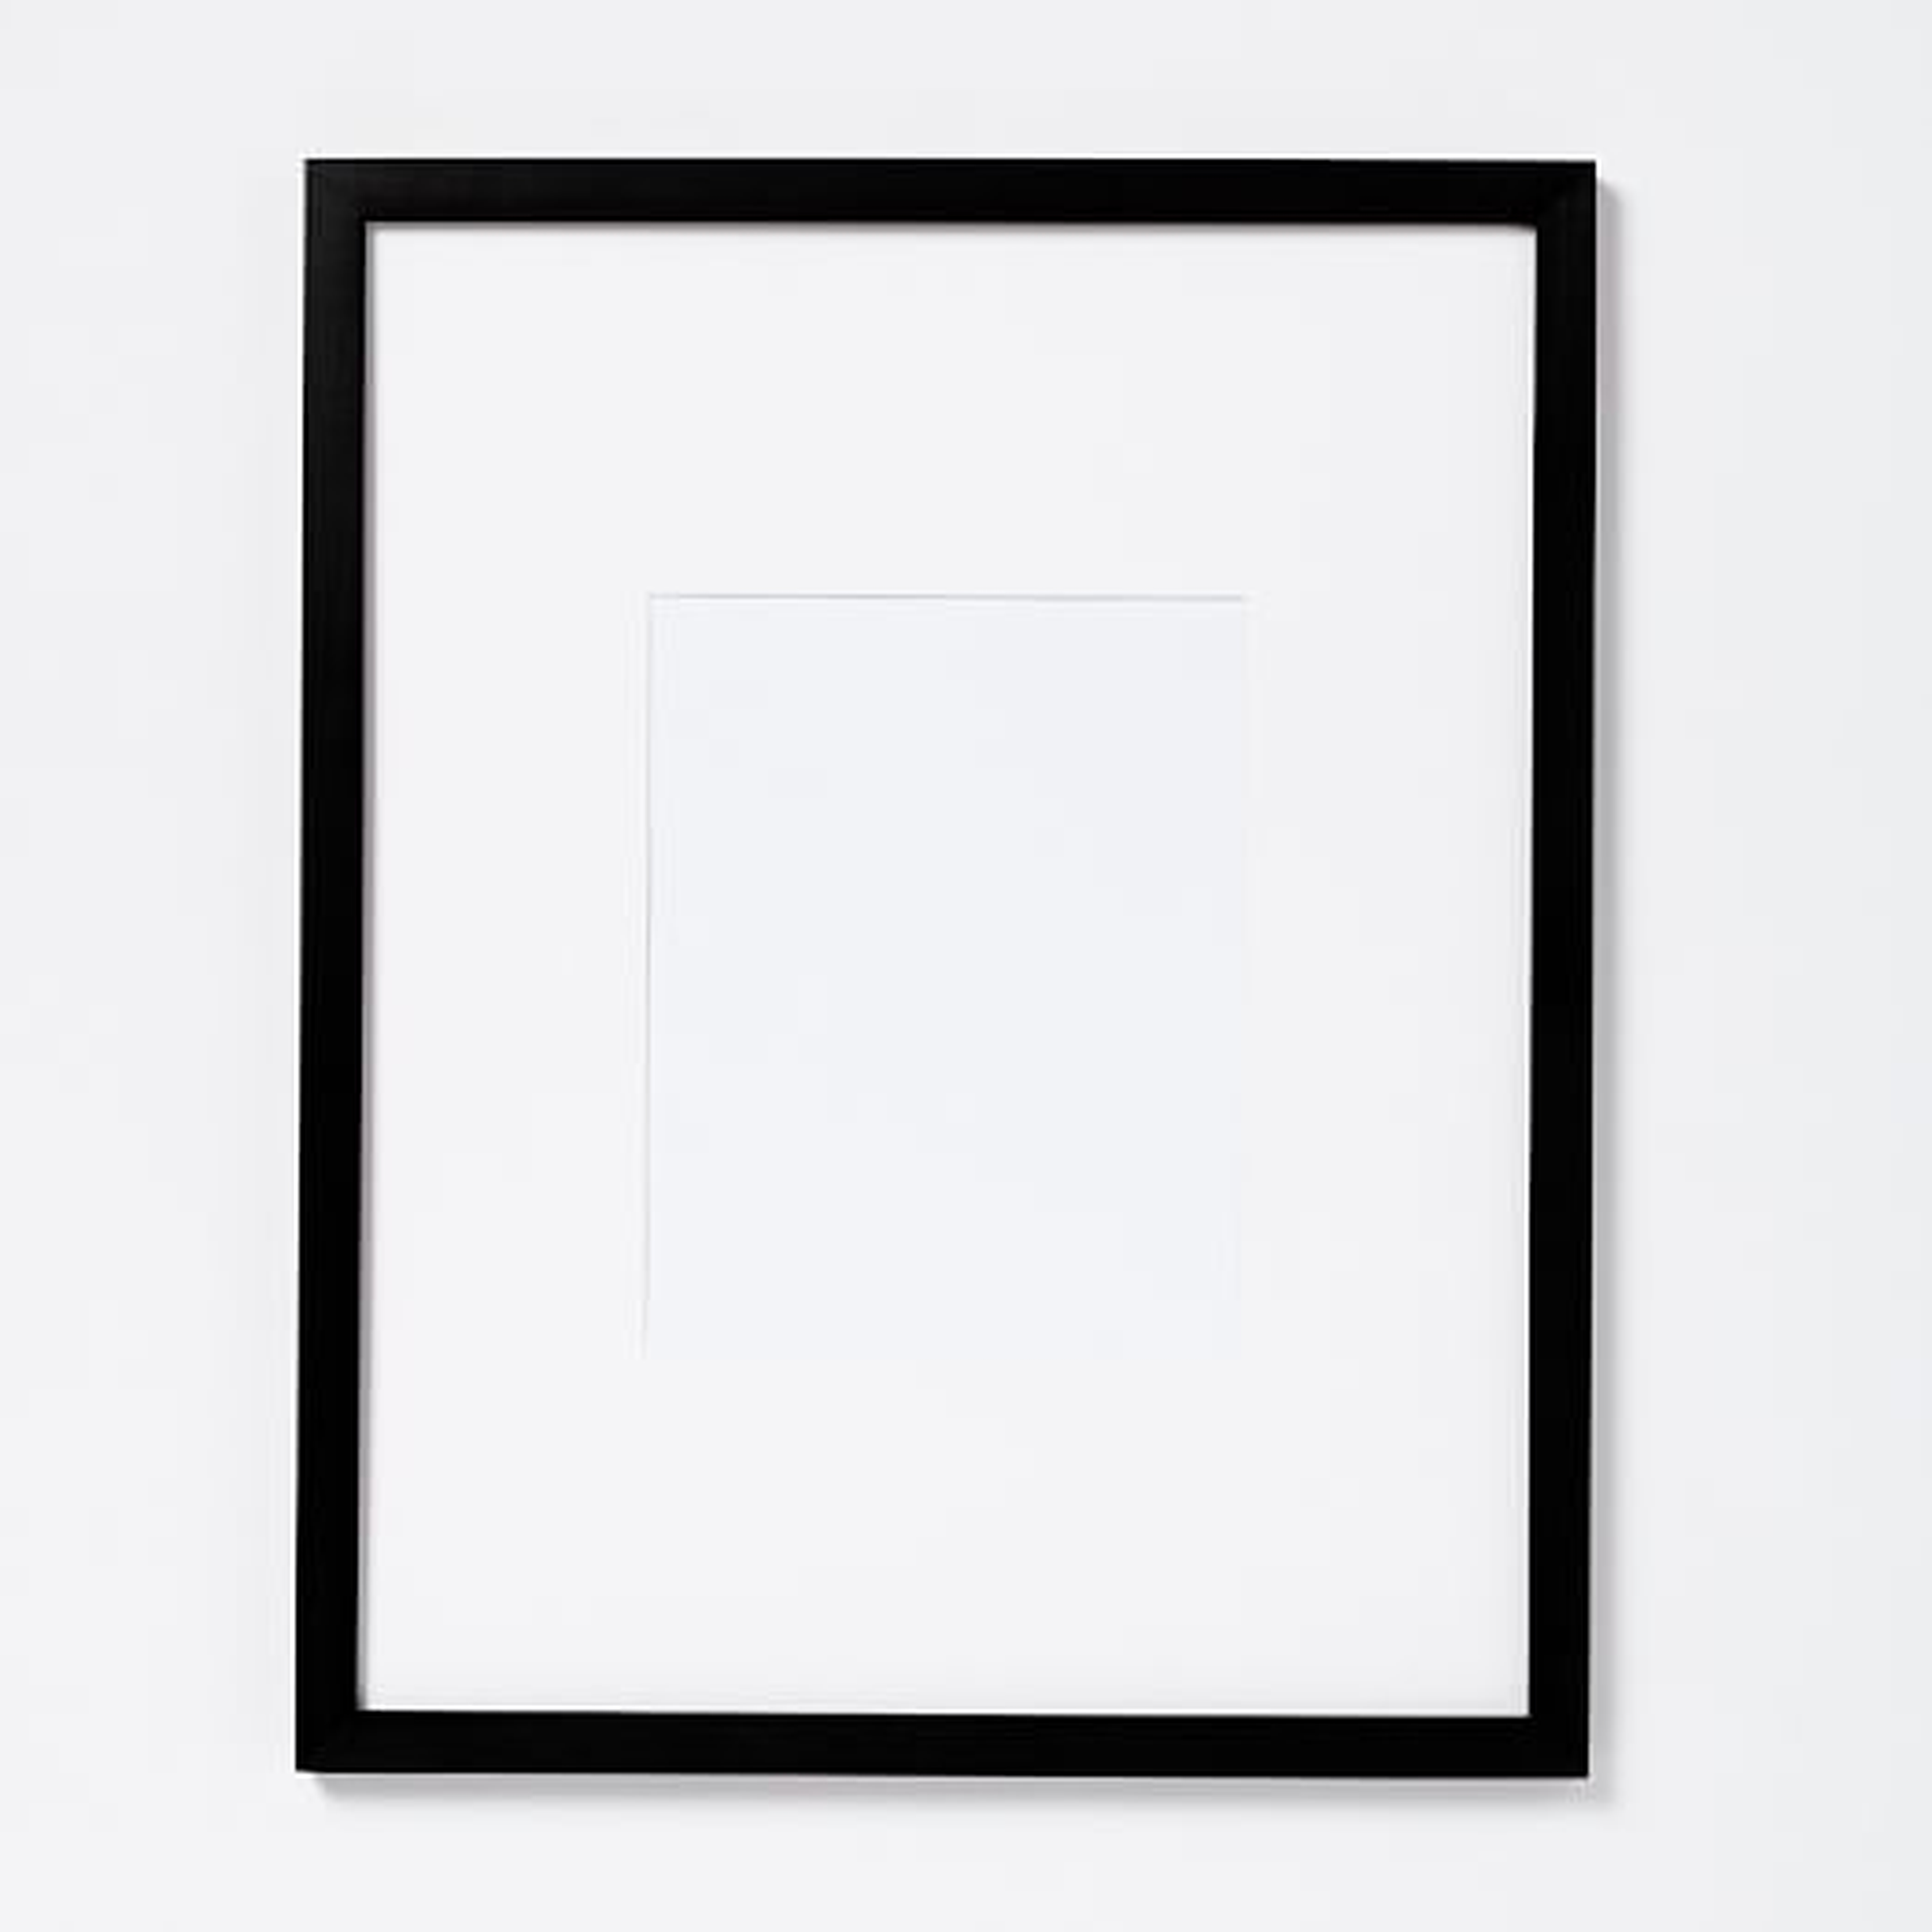 Gallery Frames - Black - West Elm